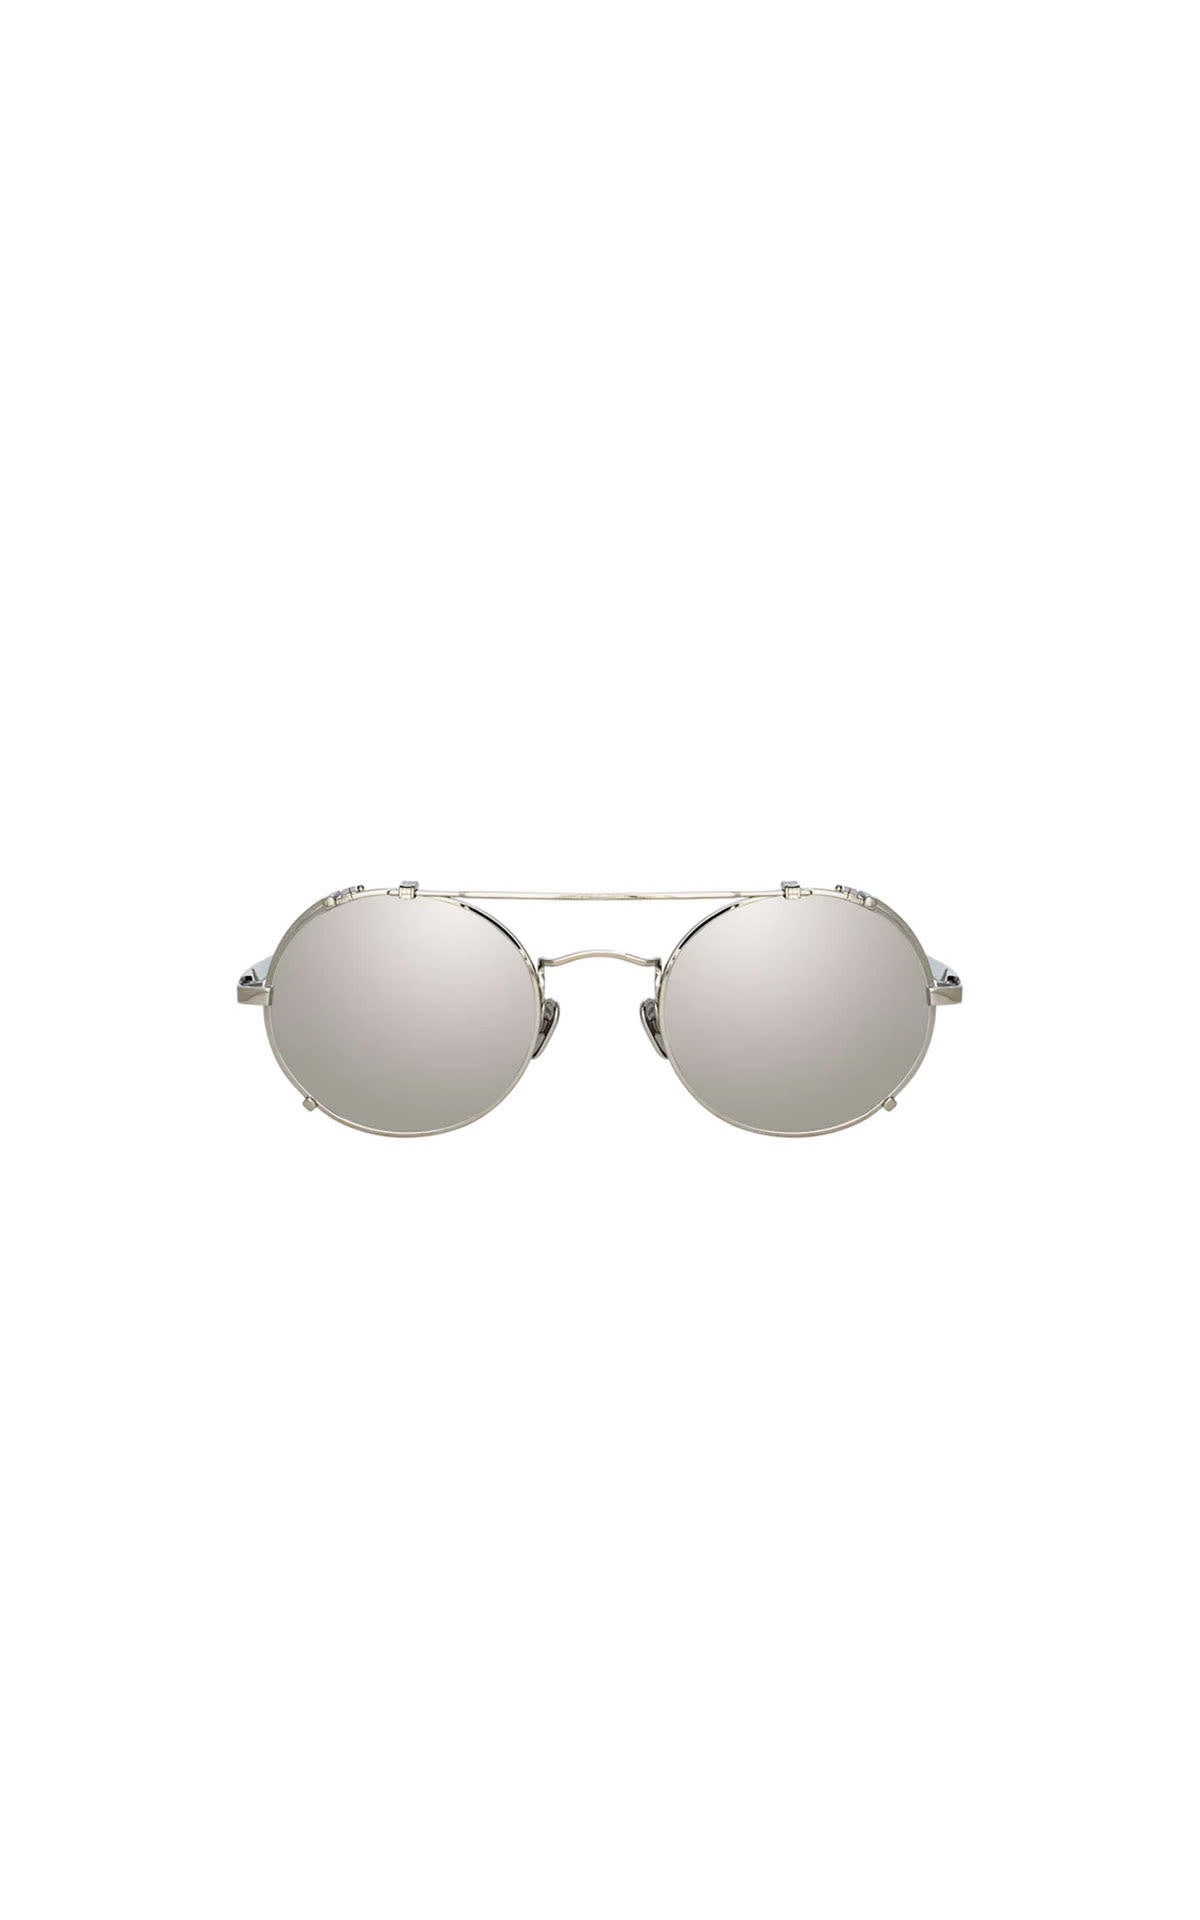 Linda Farrow White frame sunglasses from Bicester Village